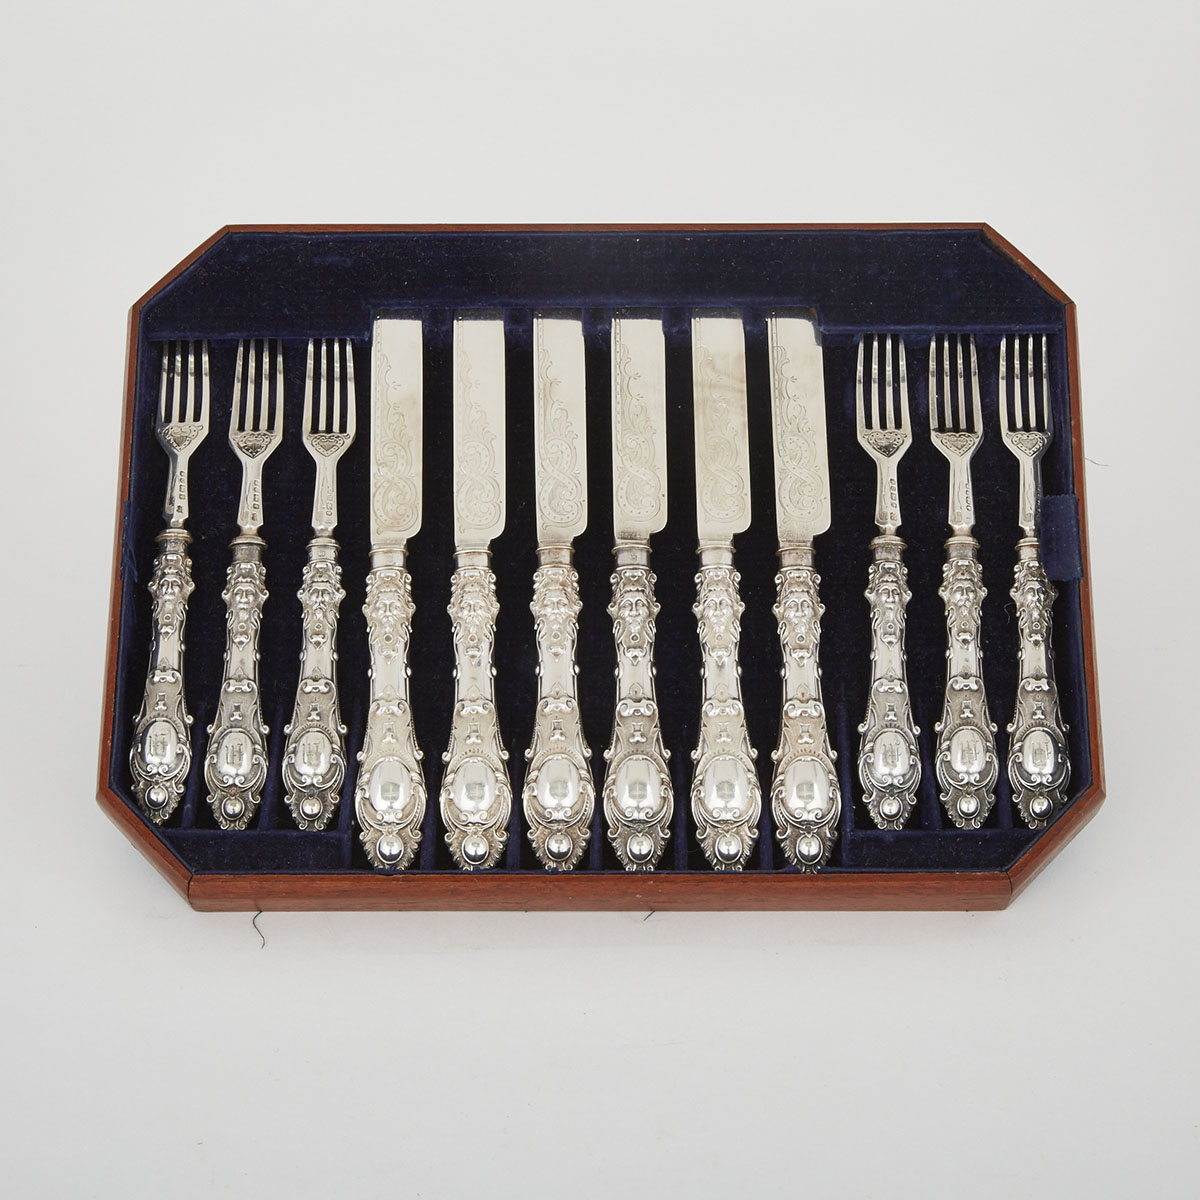 Six Victorian Silver Dessert Knives and Six Forks, Richard Martin & Ebenezer Hall, Sheffield, 1864-71